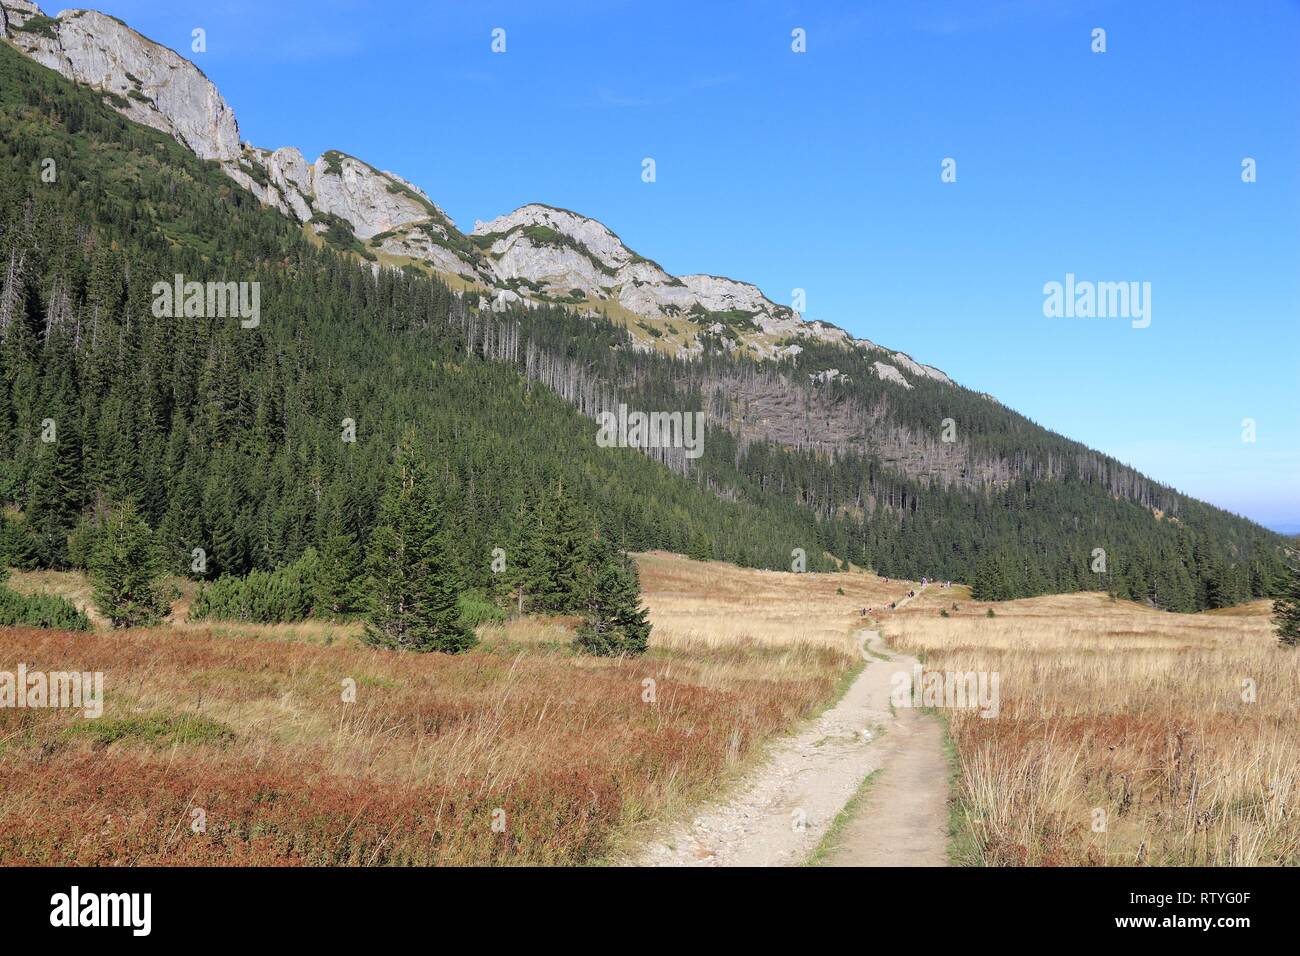 Le montagne in Polonia - Tatry National Park. Sentiero escursionistico a Czerwone Wierchy. Foto Stock